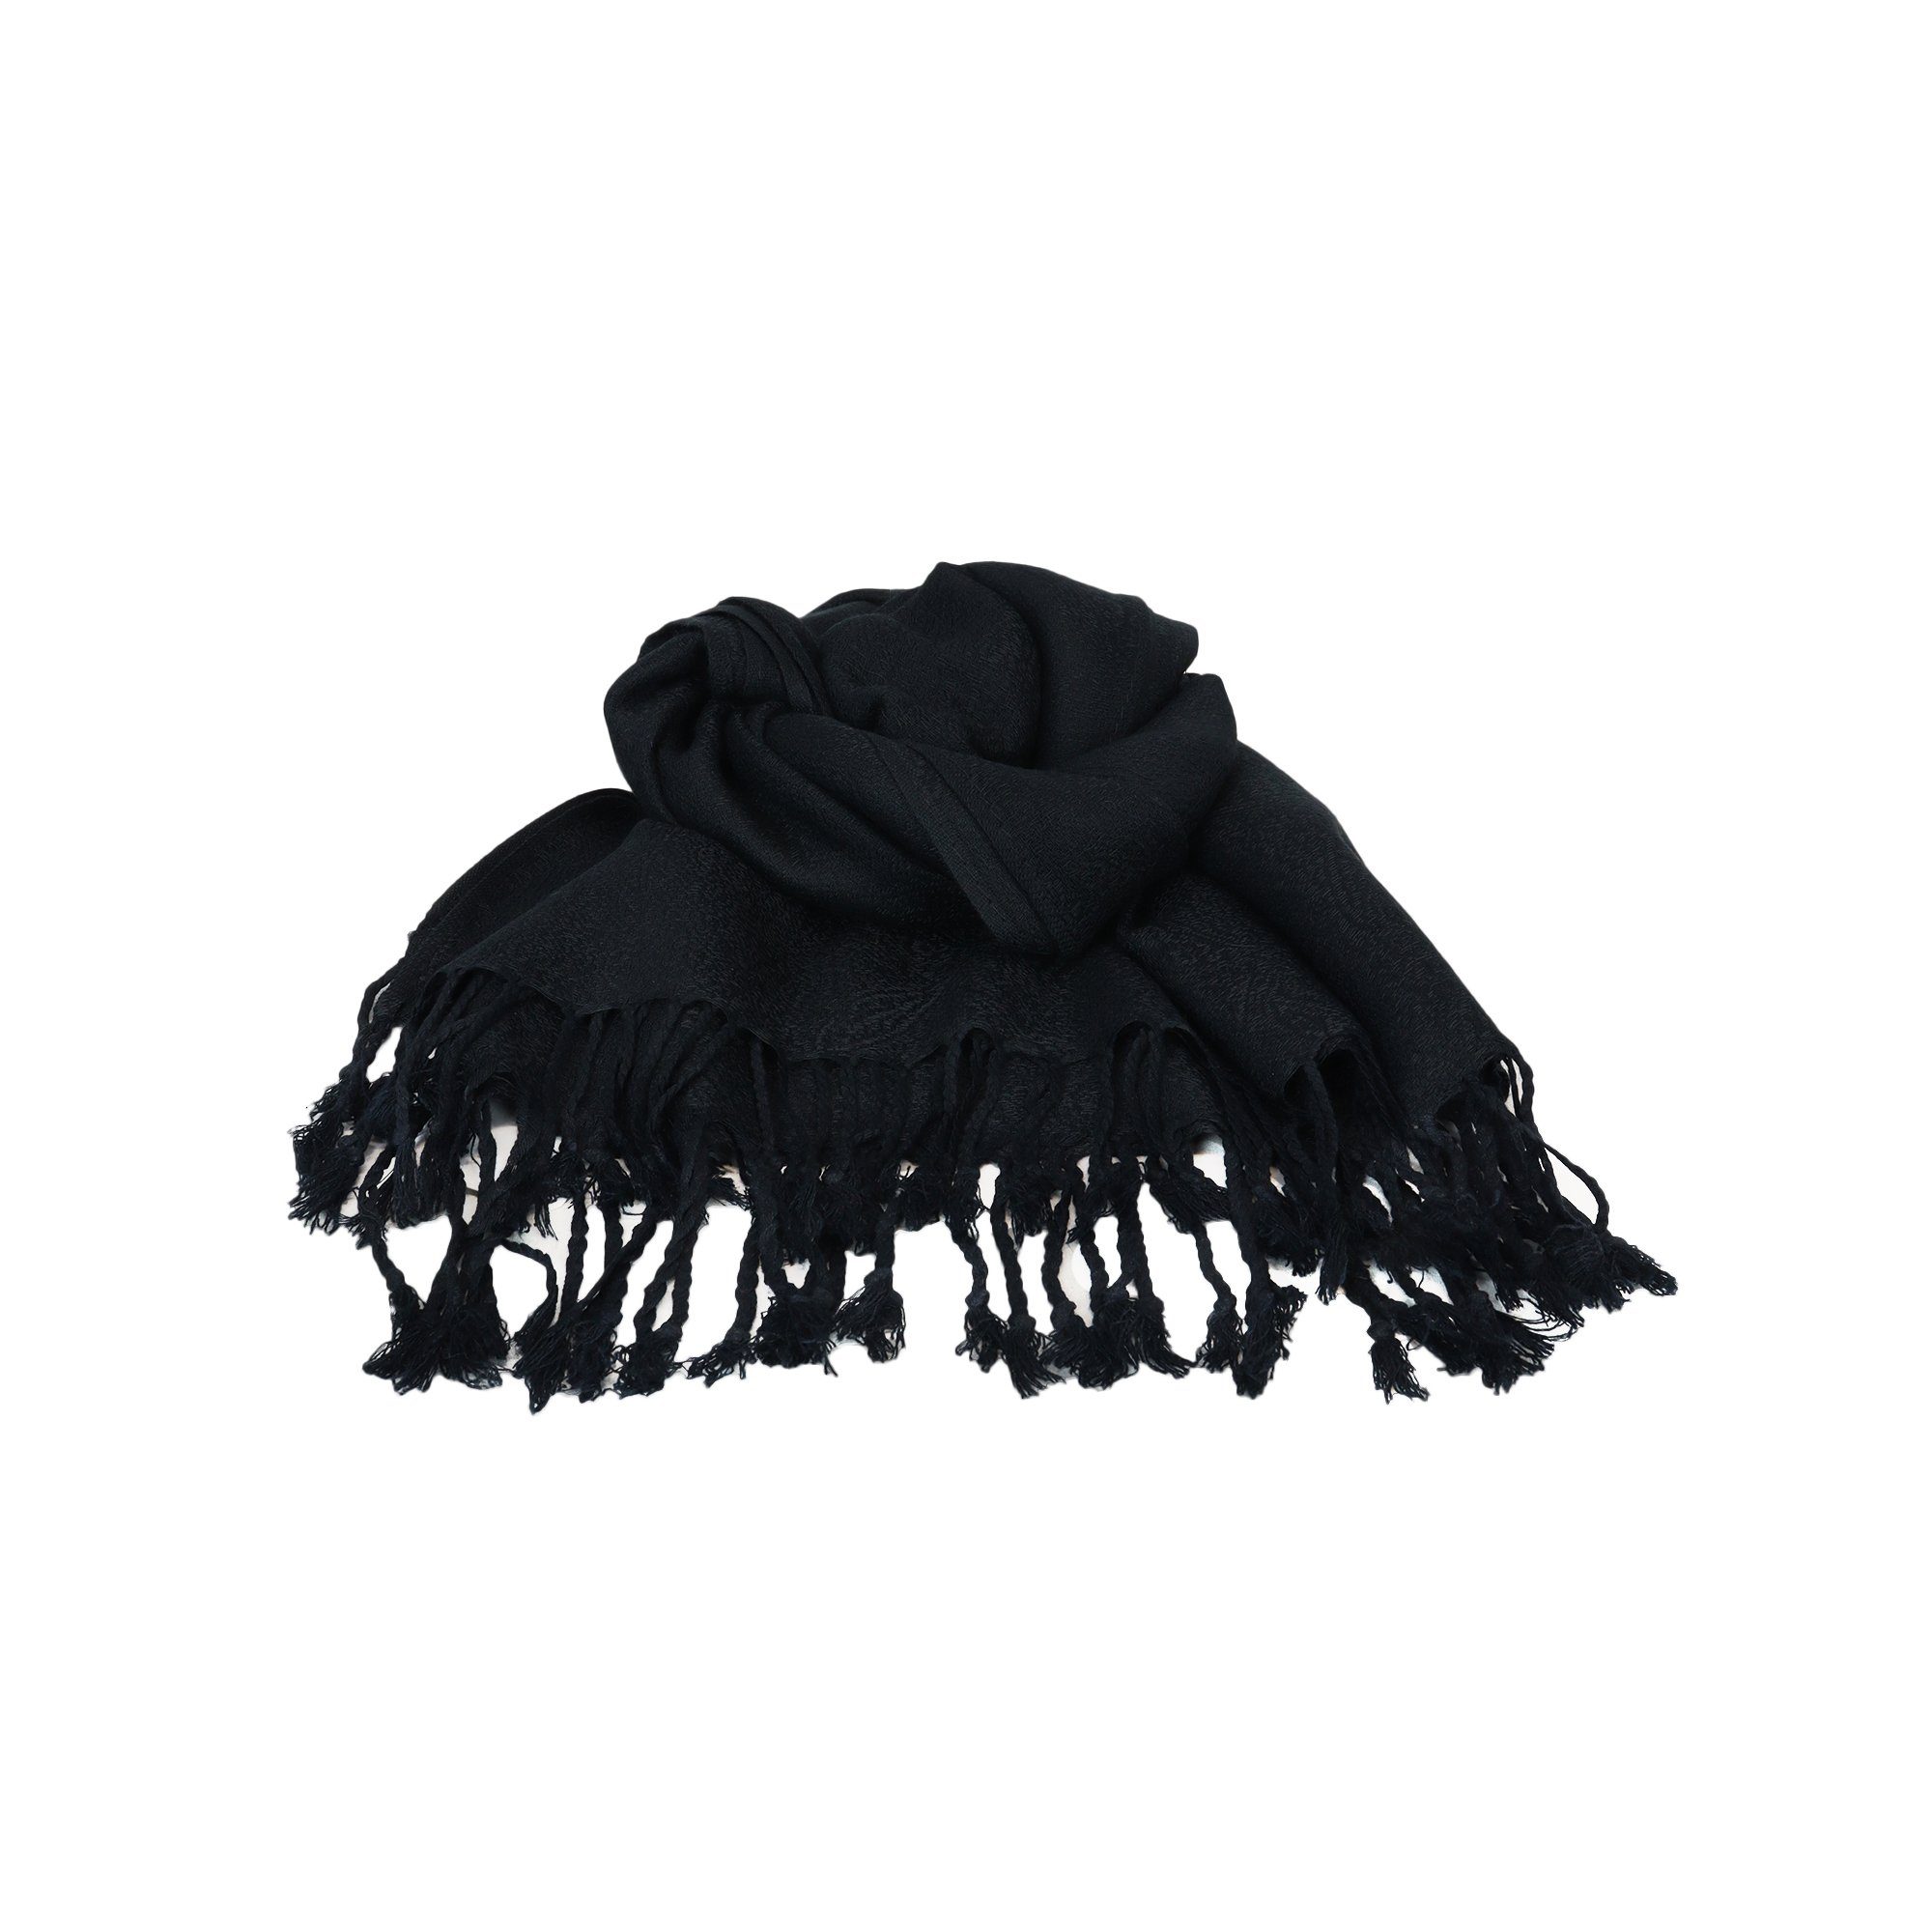 ZEBRO Modeschal Schal, schwarz Fransen